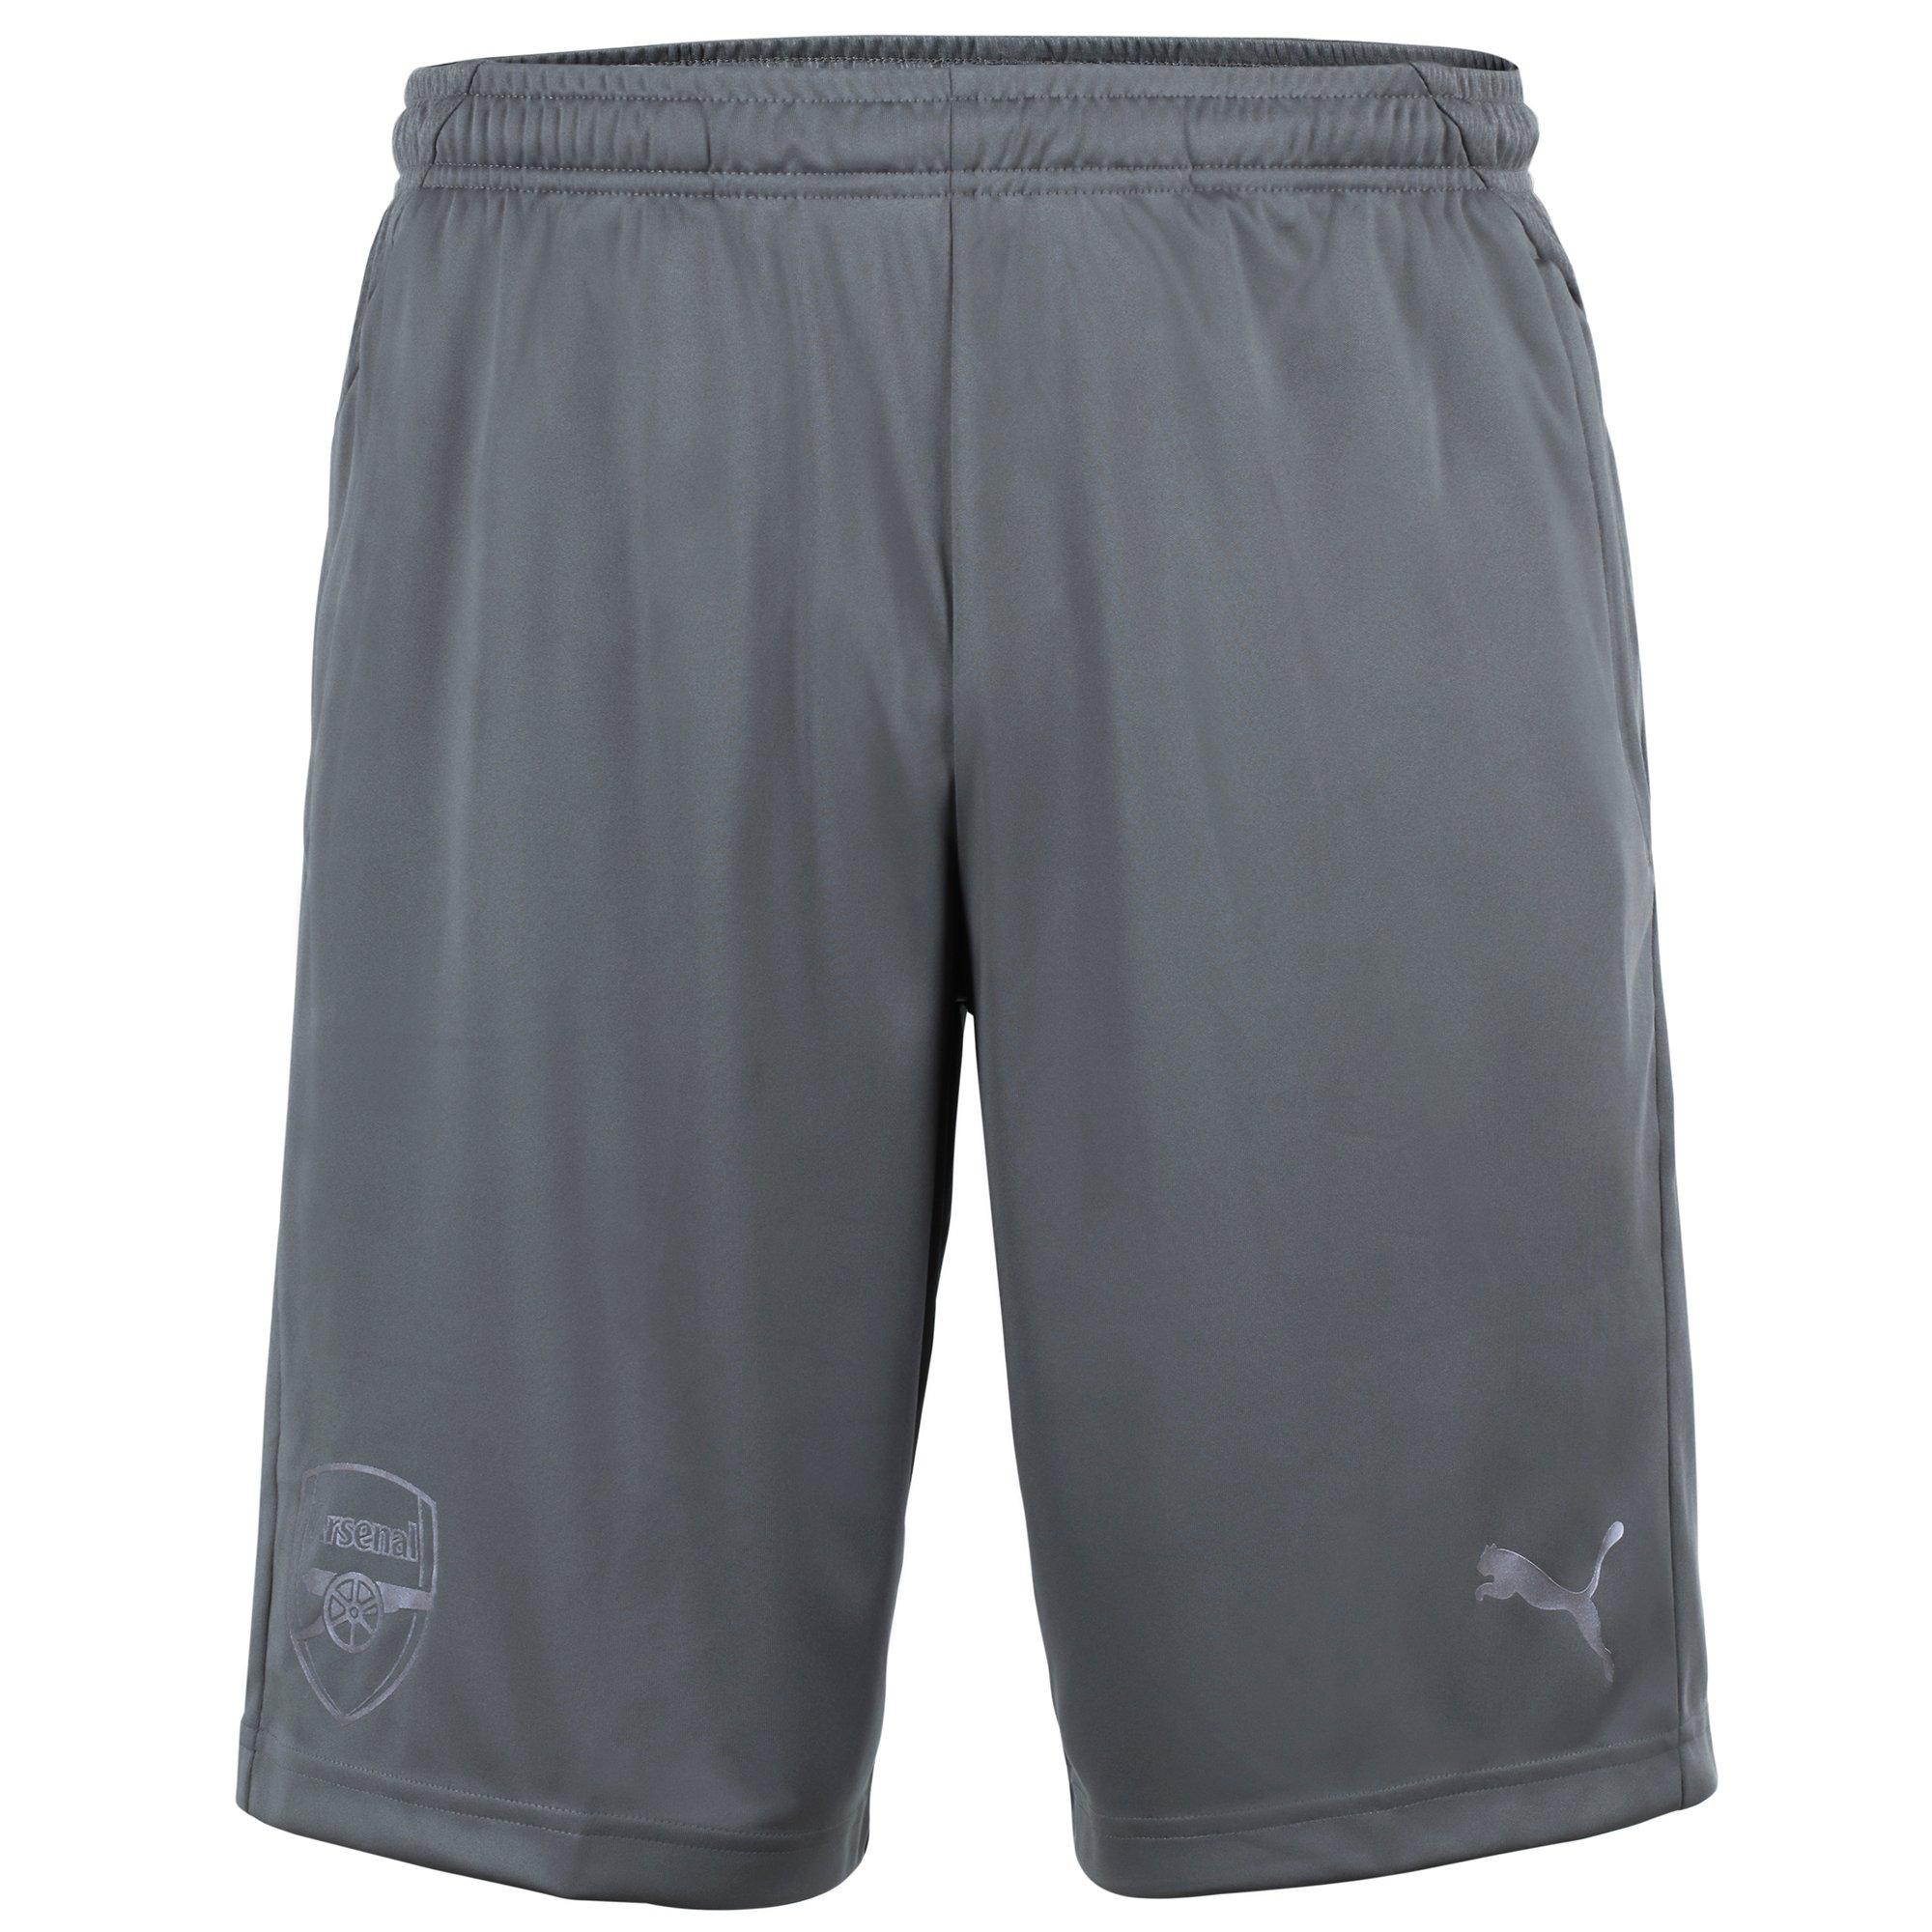 arsenal shorts with pockets